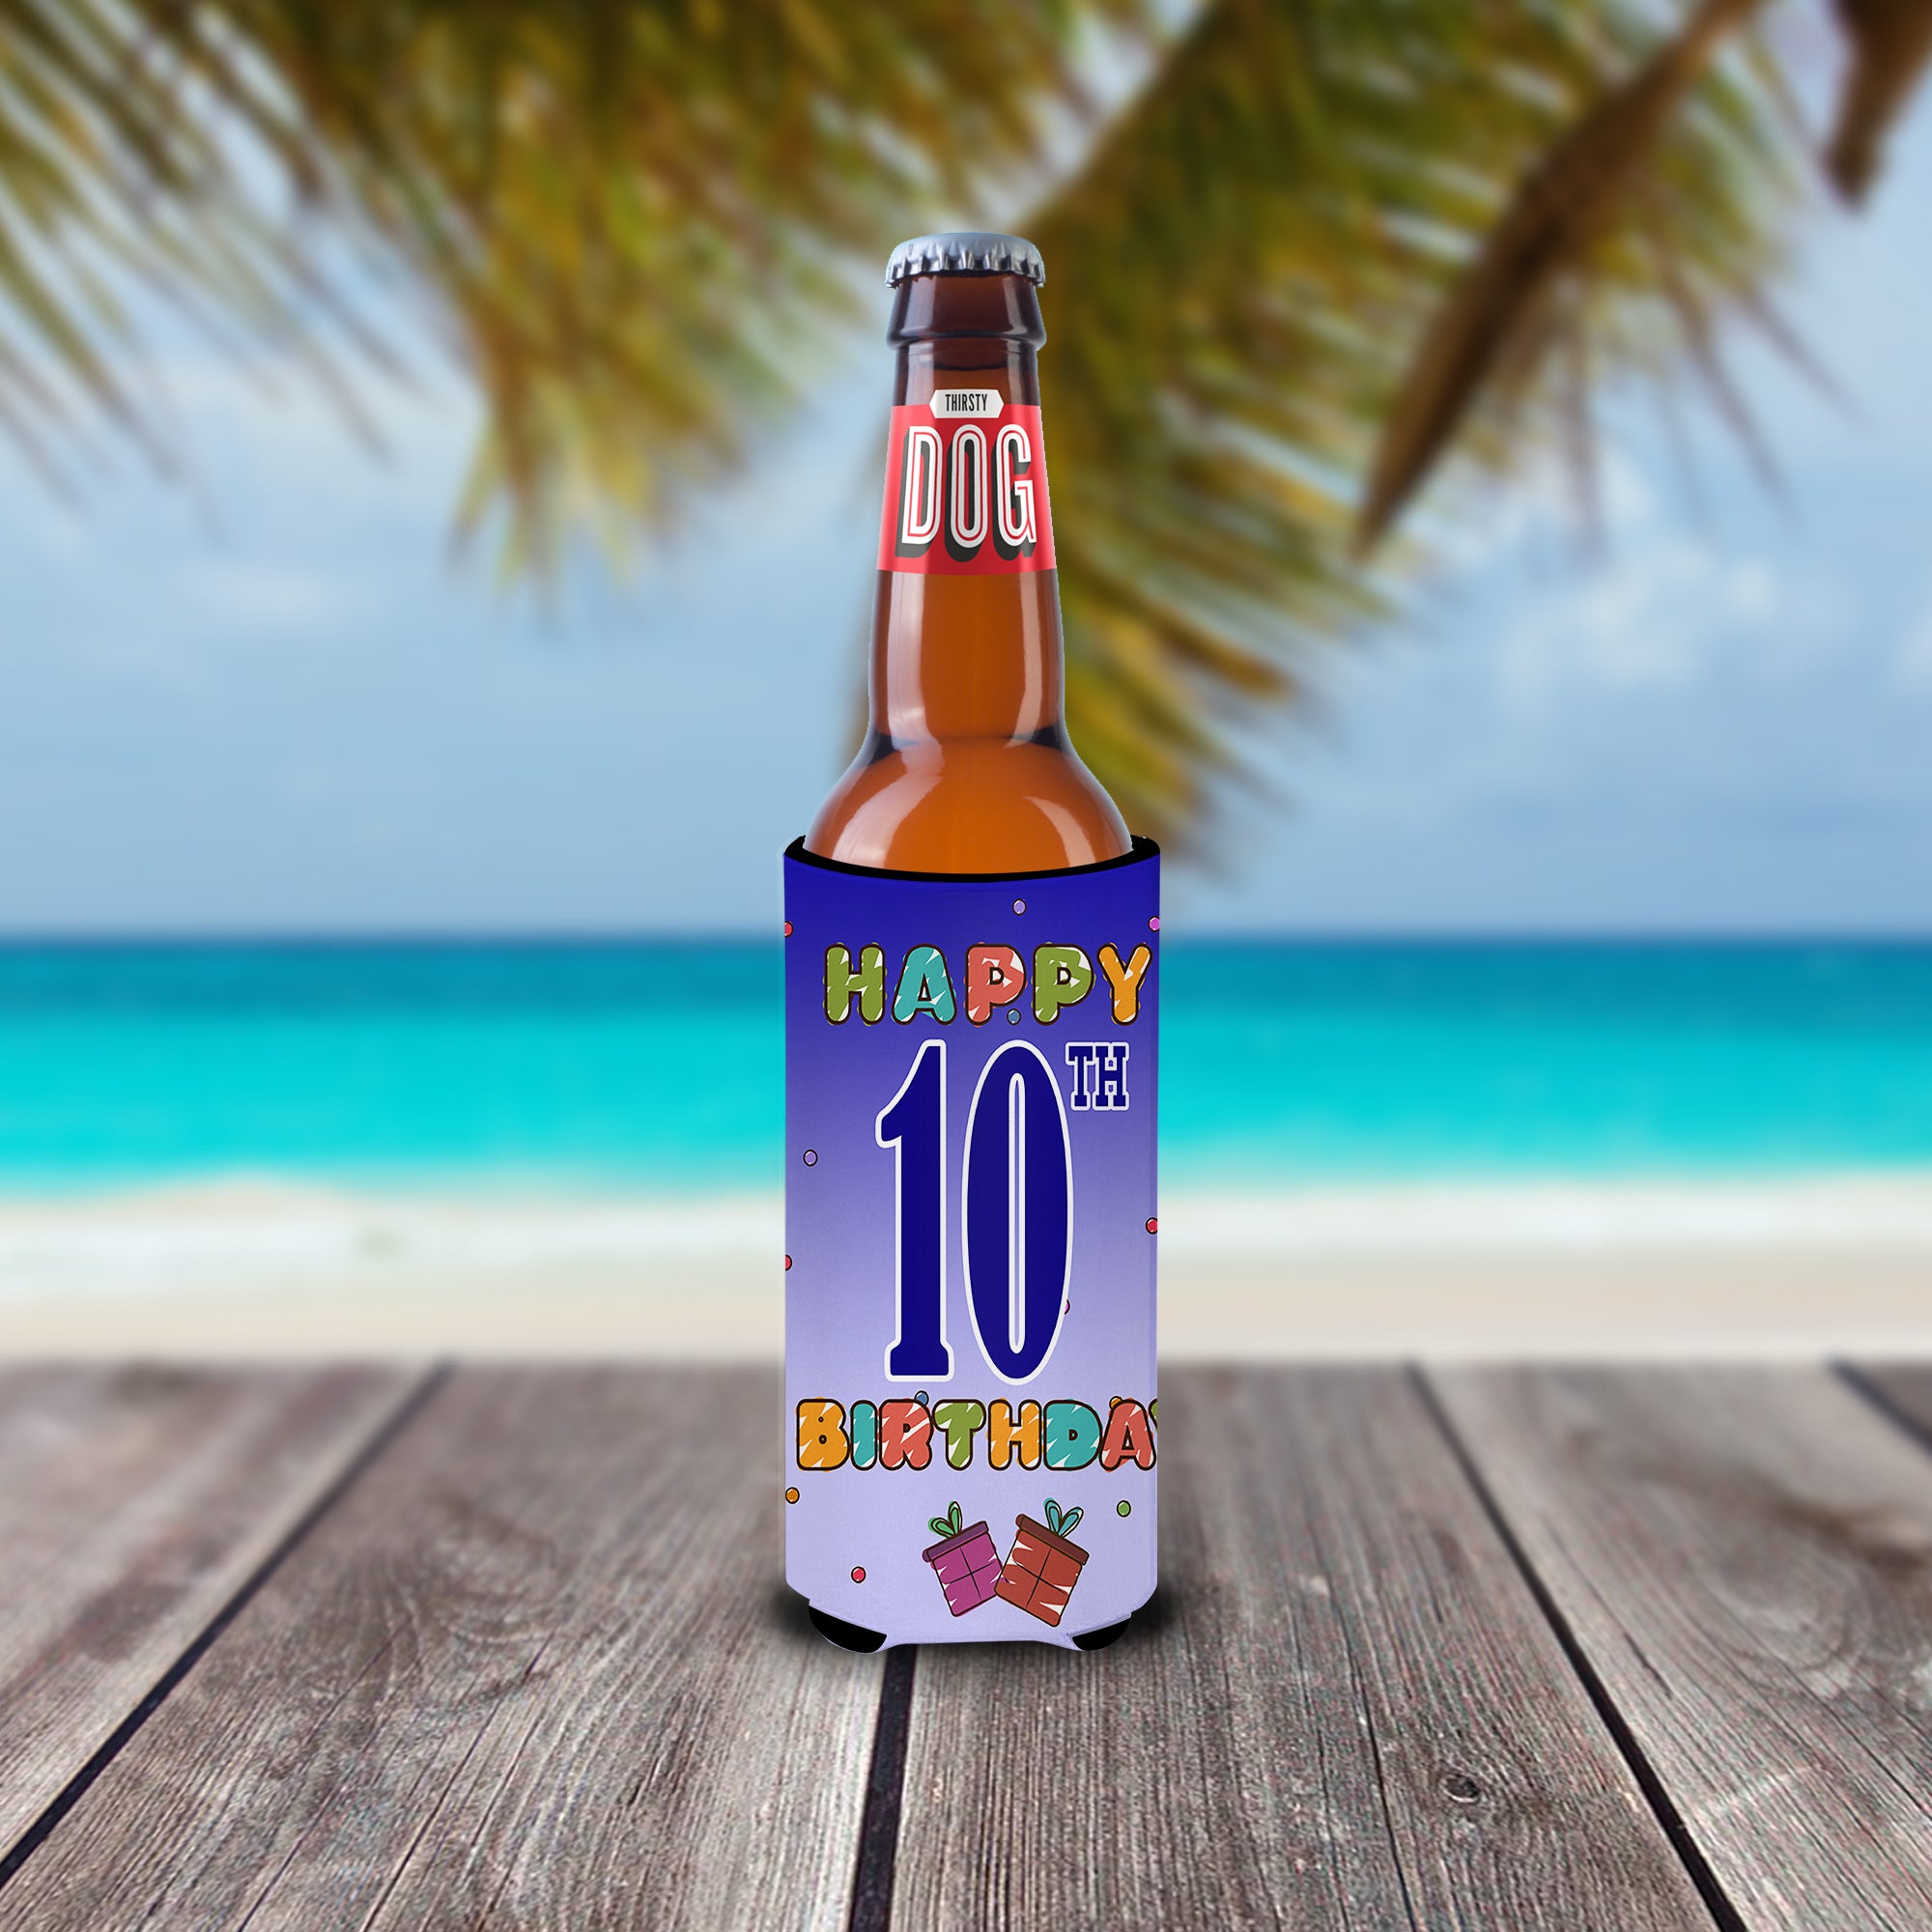 Happy 10th Birthday Ultra Beverage Insulators for slim cans CJ1101MUK